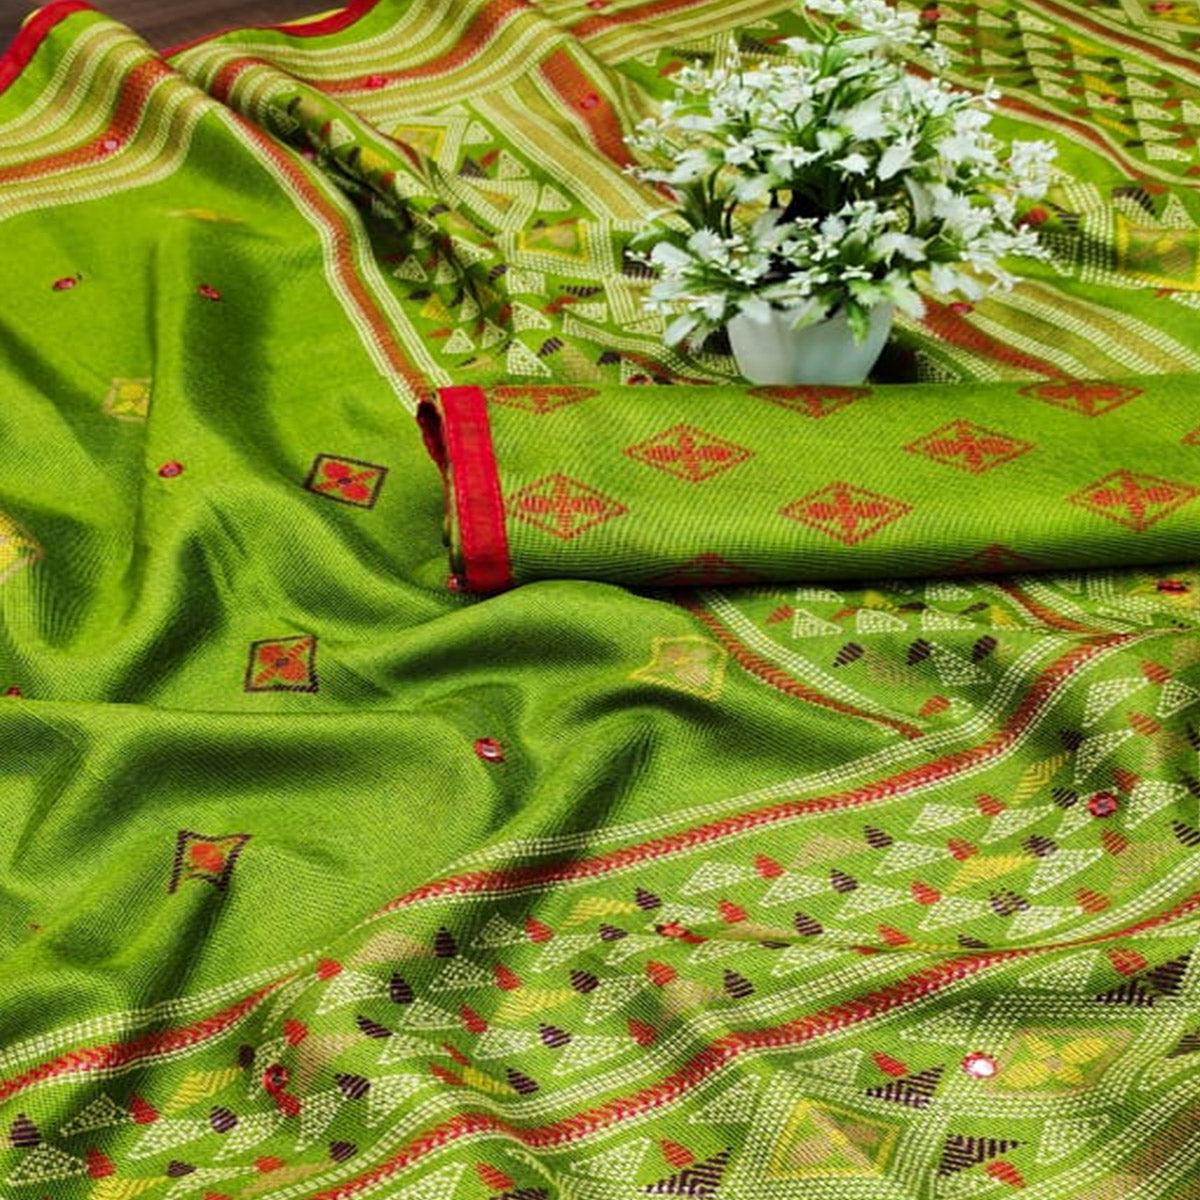 Radiant Green Coloured Casual Wear Printed Cotton Jute Saree - Peachmode